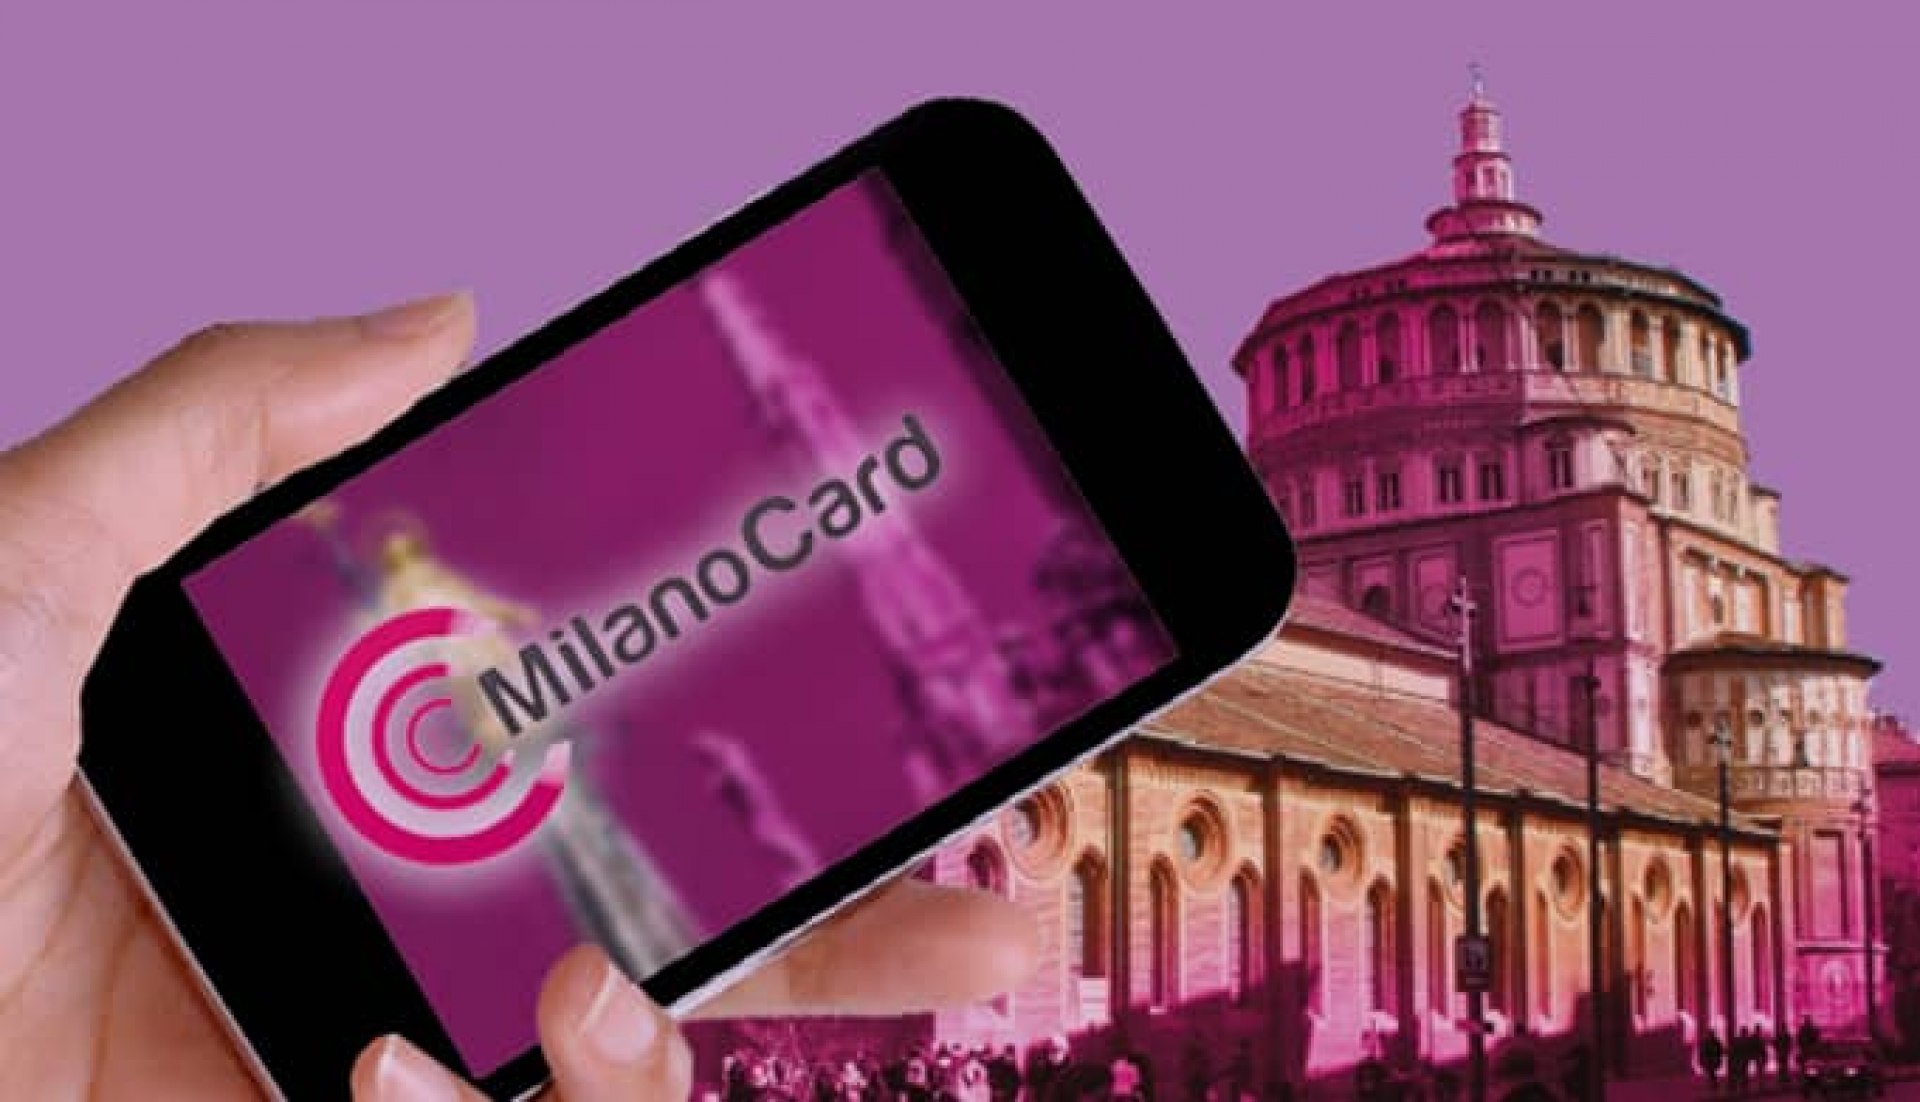 MilanoCard